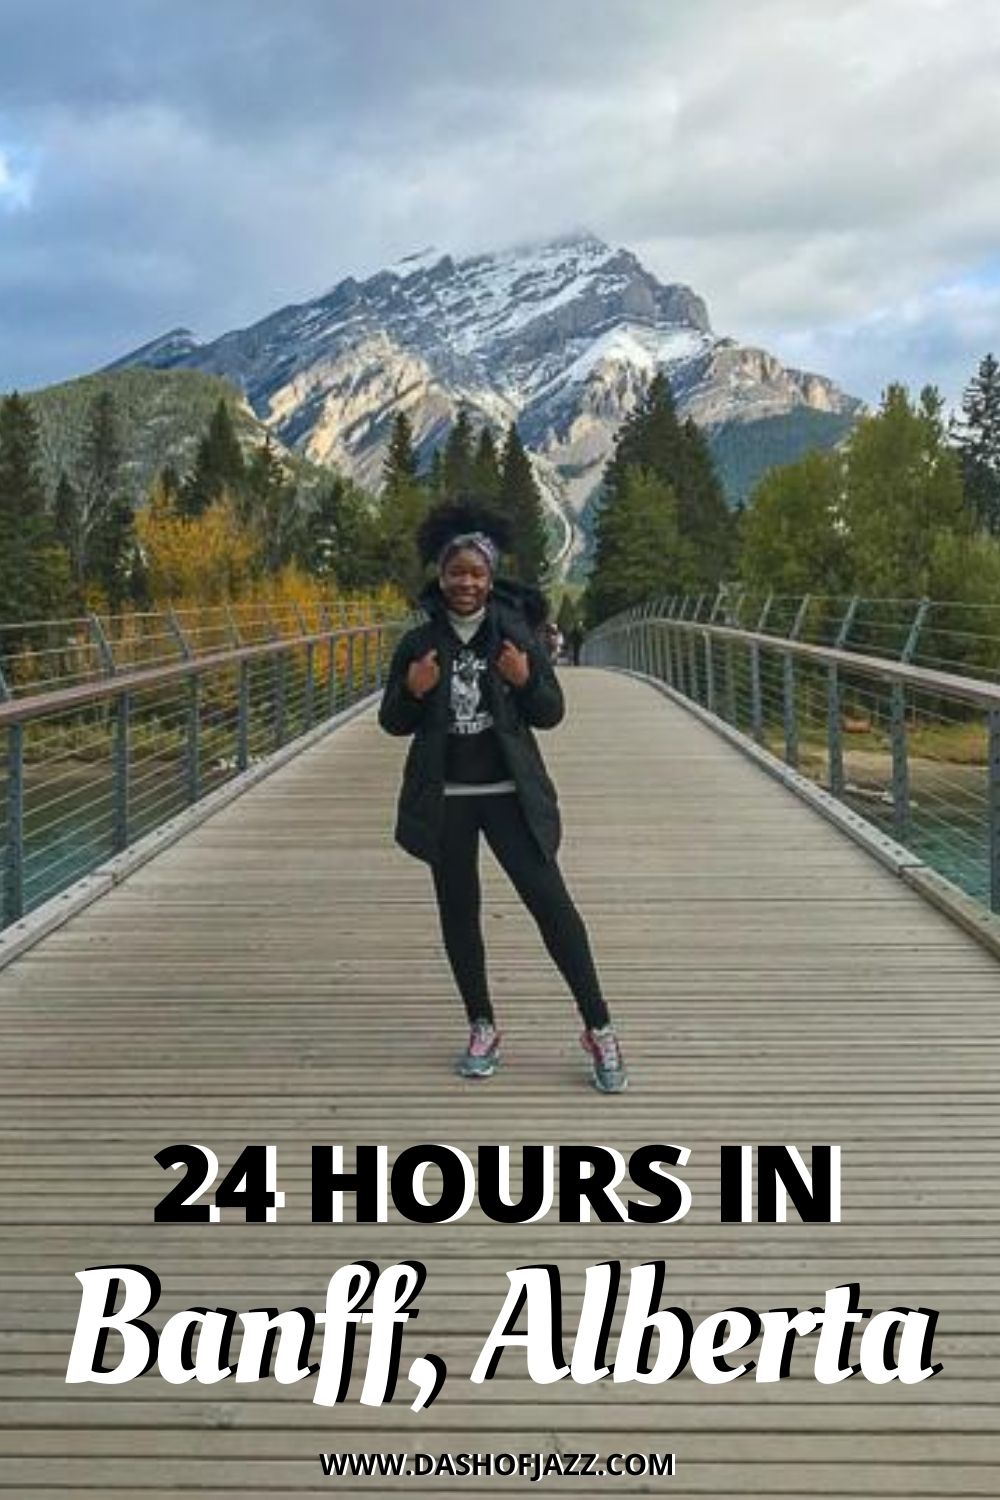 Jazzmine standing on bridge in Banff, Alberta with text overlay "24 hours in Banff, Alberta"